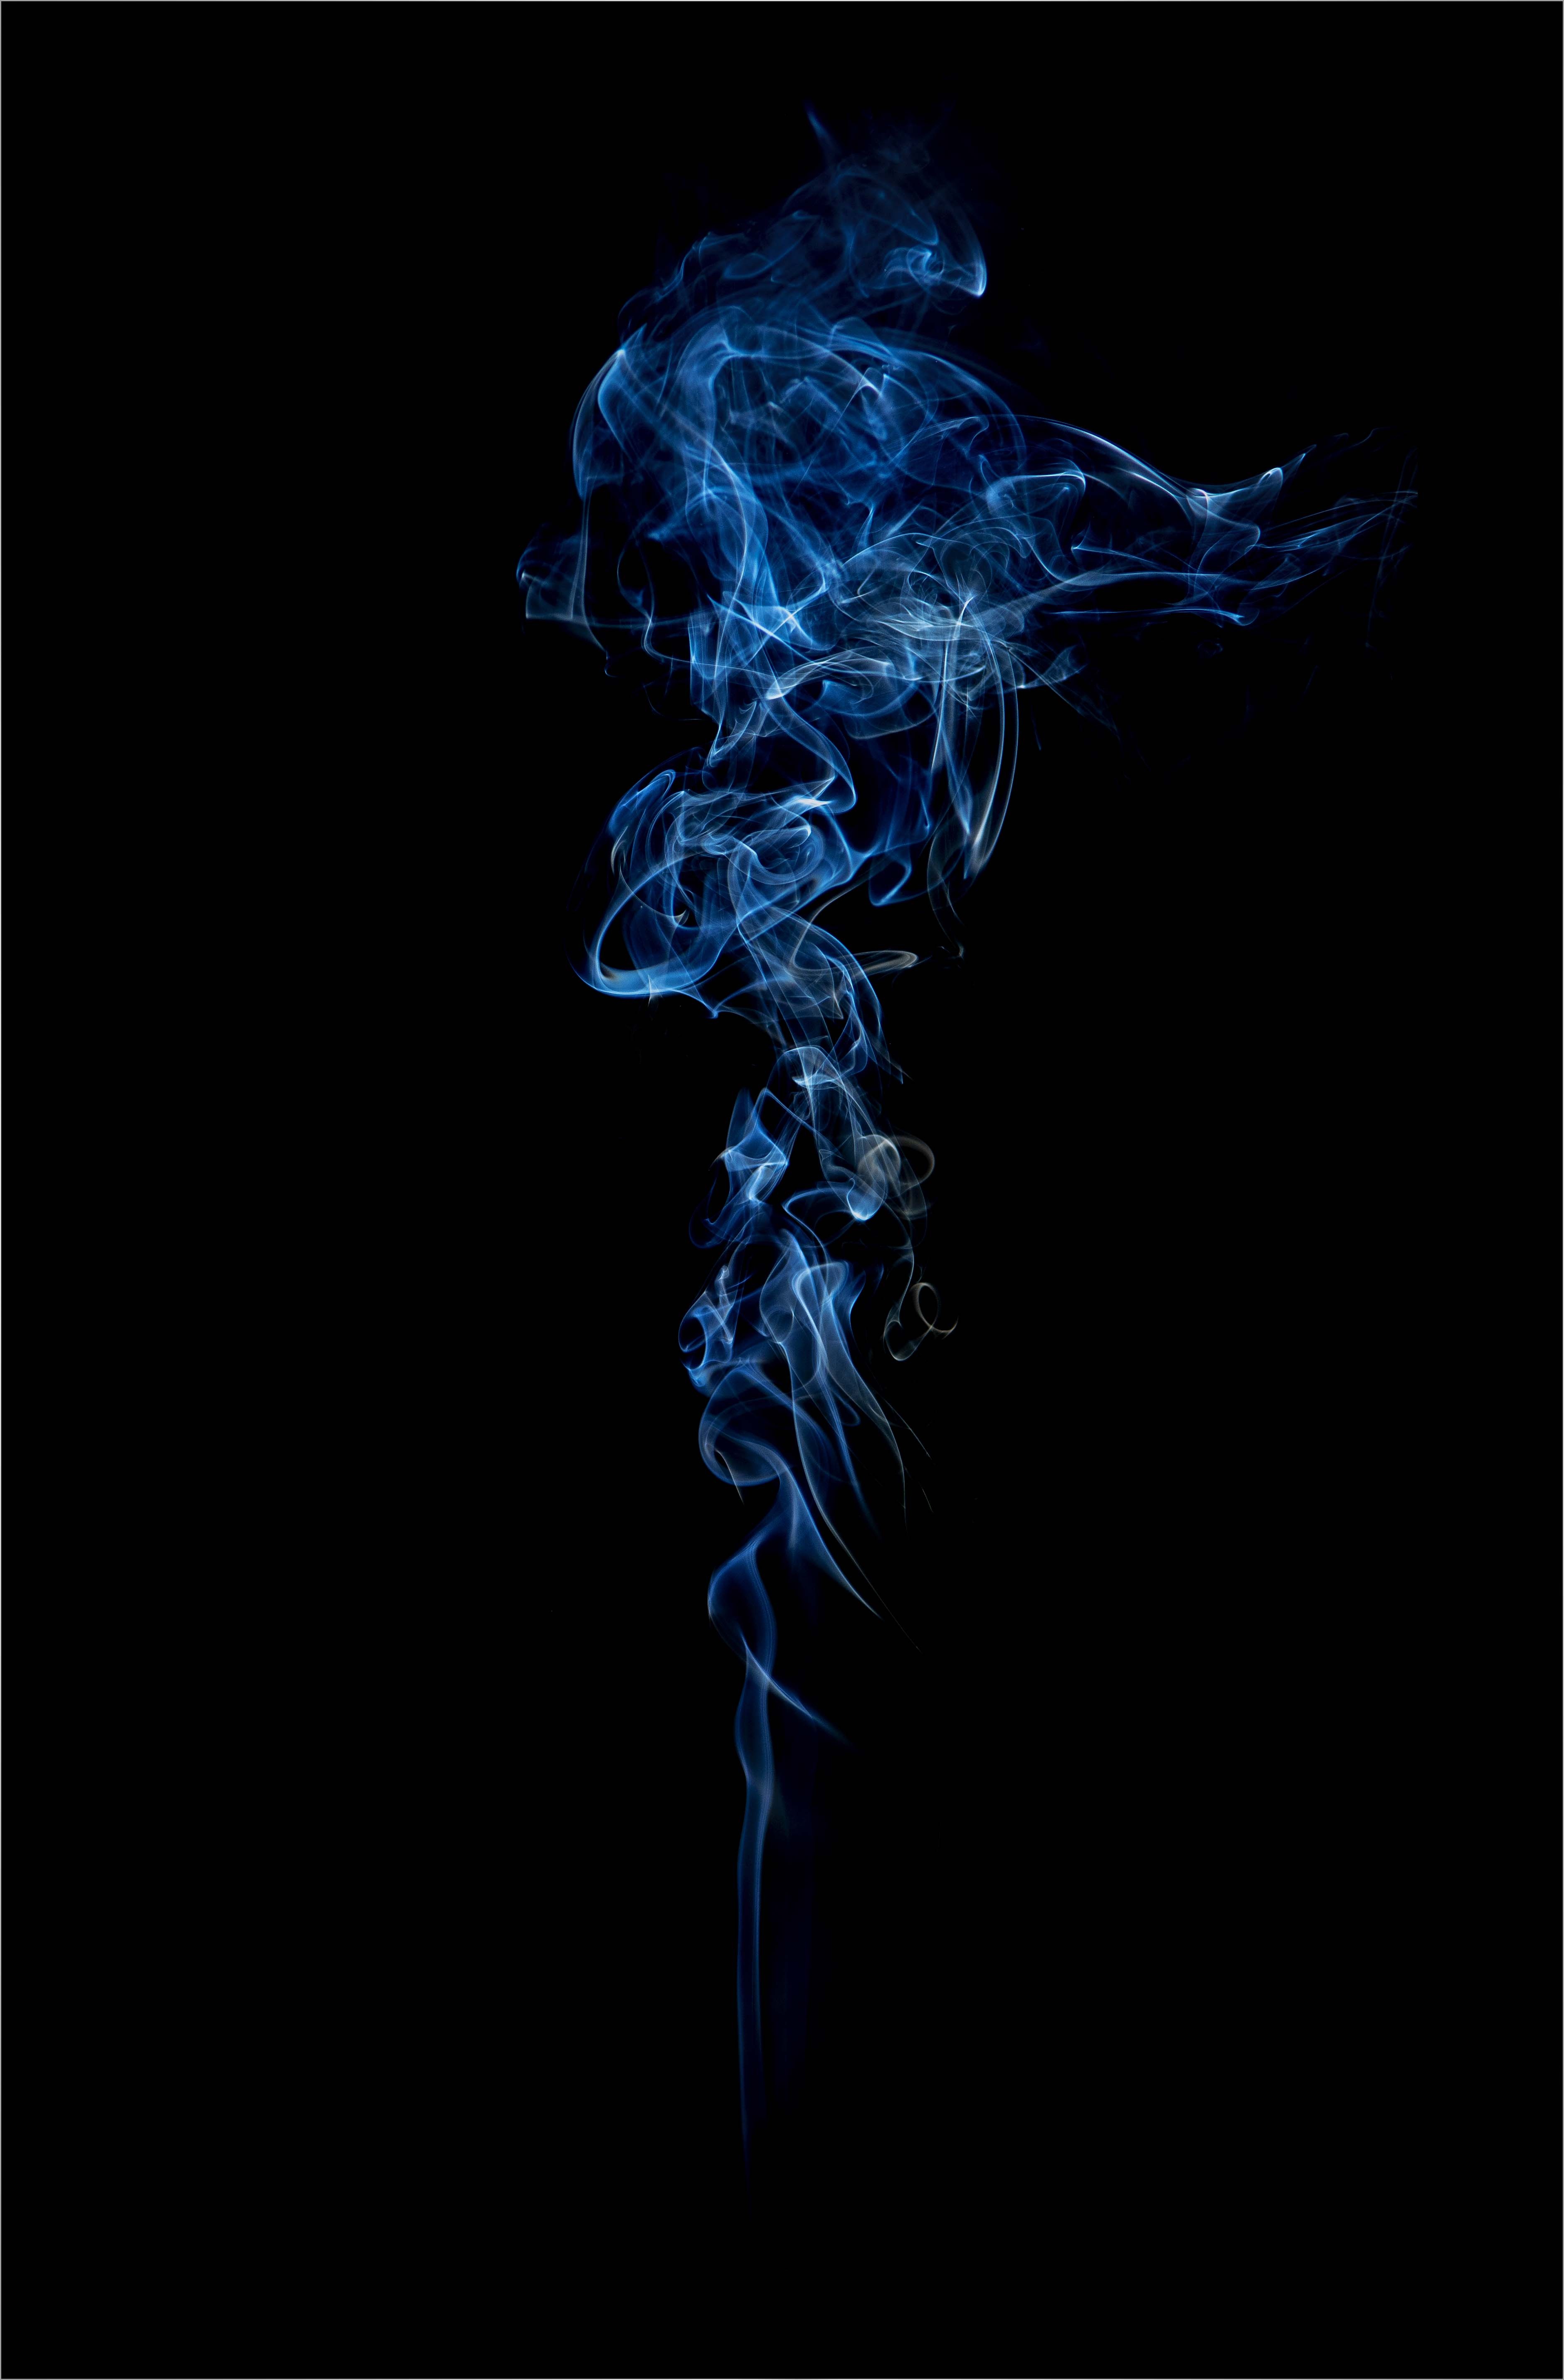 shroud, smoke, blue, dark, clot